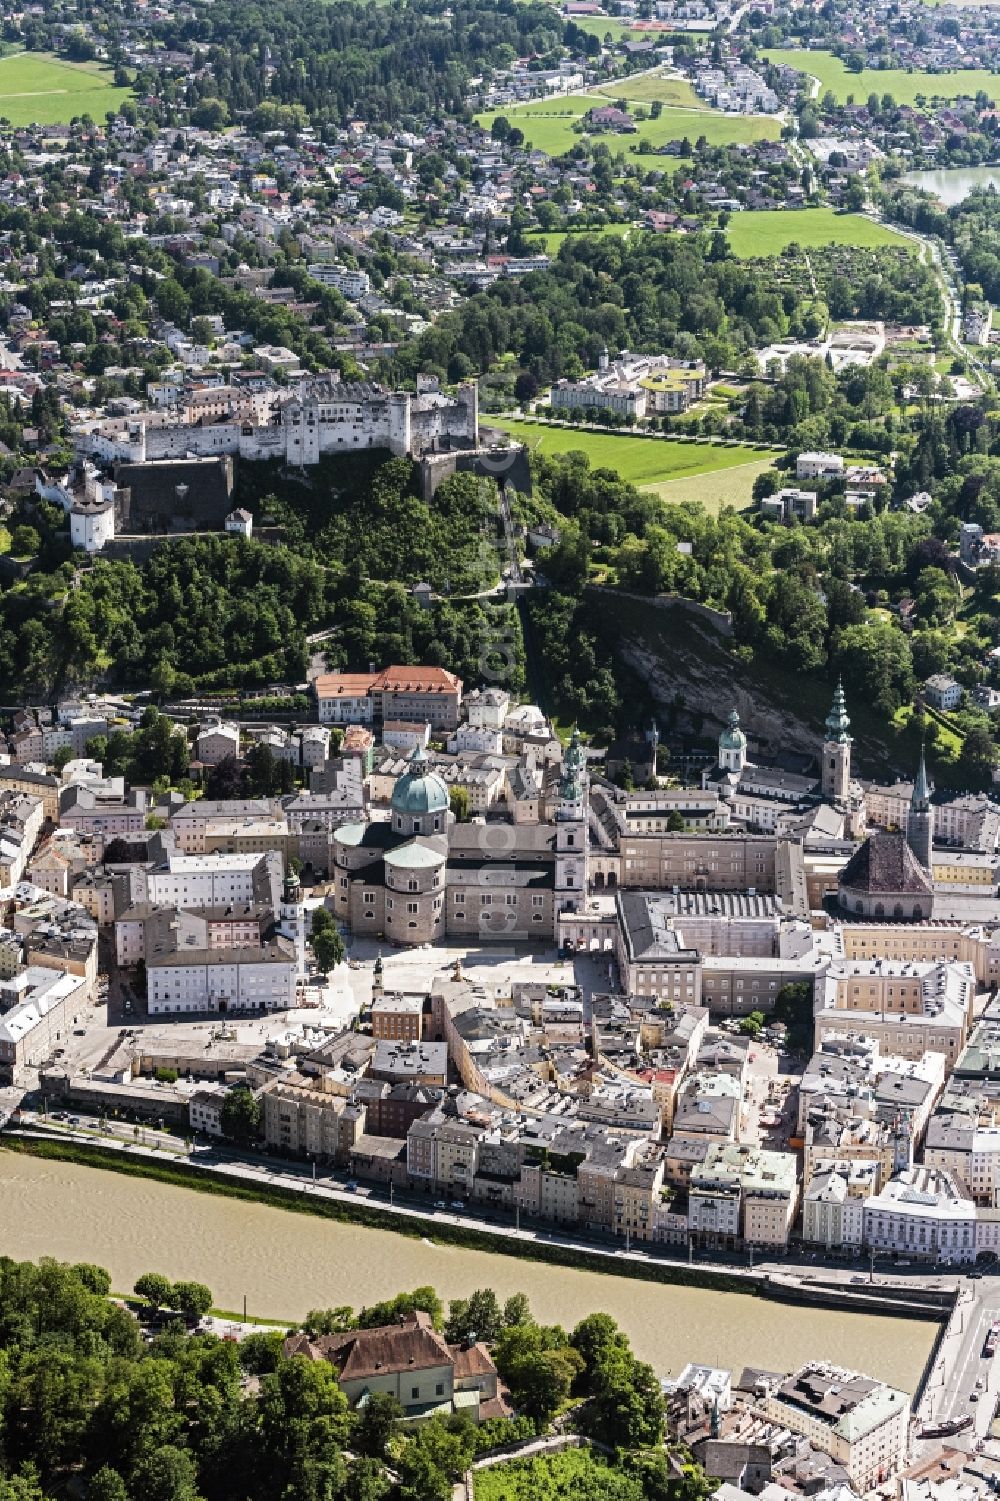 Aerial photograph Salzburg - City view on the river bank of Salzach in Salzburg in Austria